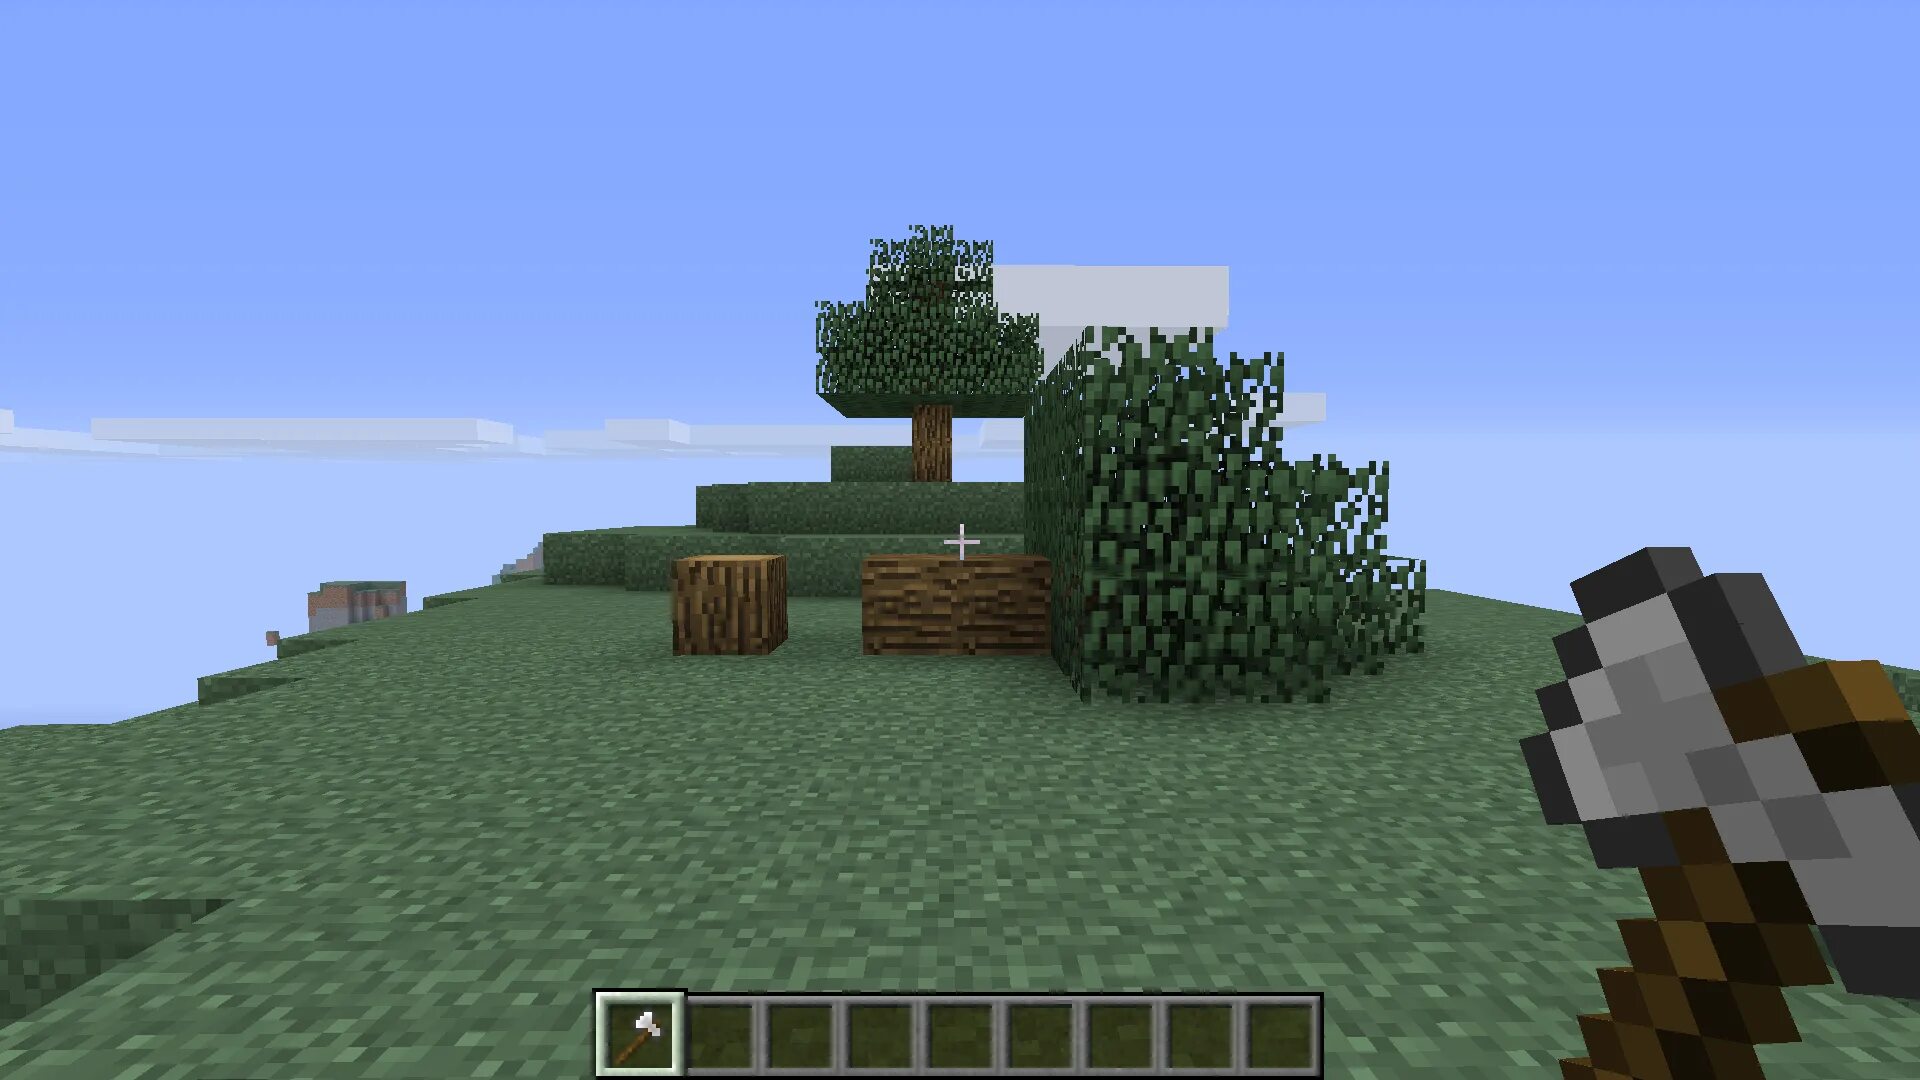 Мод Falling Tree. Treecapitator датапак 1.16.5. Мод на деревья. Мод на срубку деревьев в Minecraft 1.16.5.